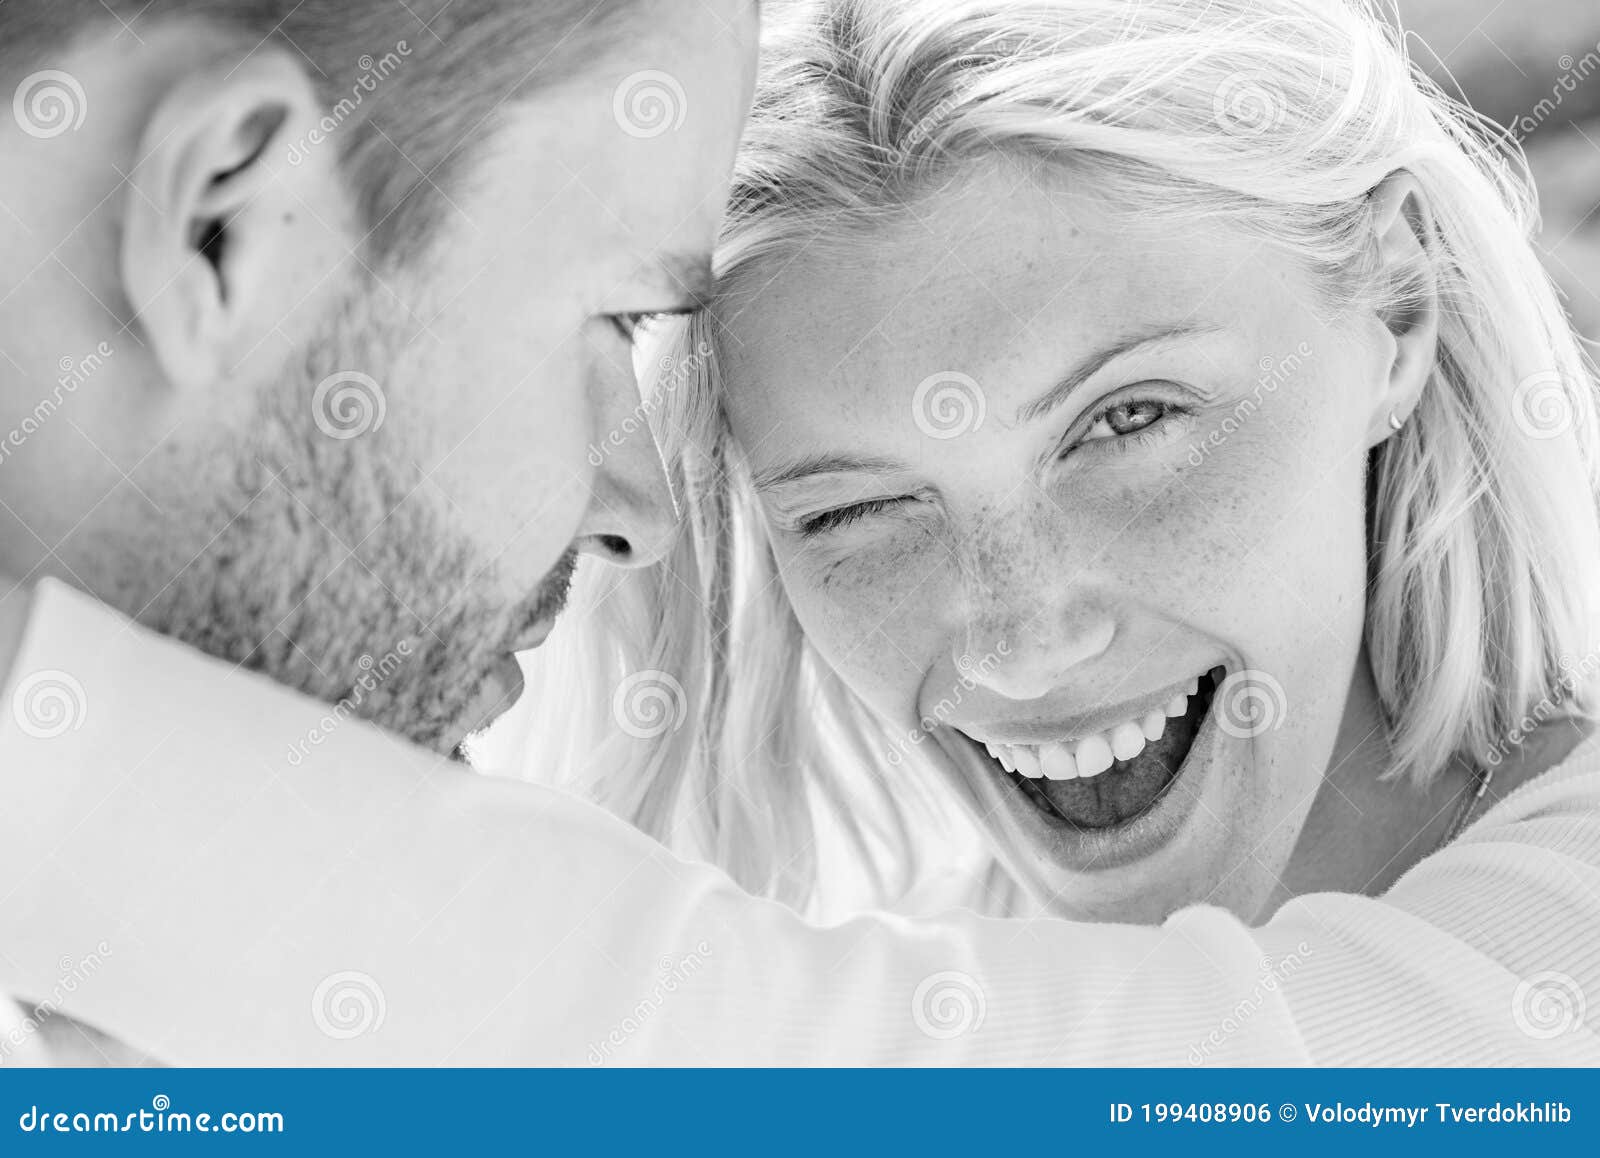 christina margaretha add sensual images of couples photo